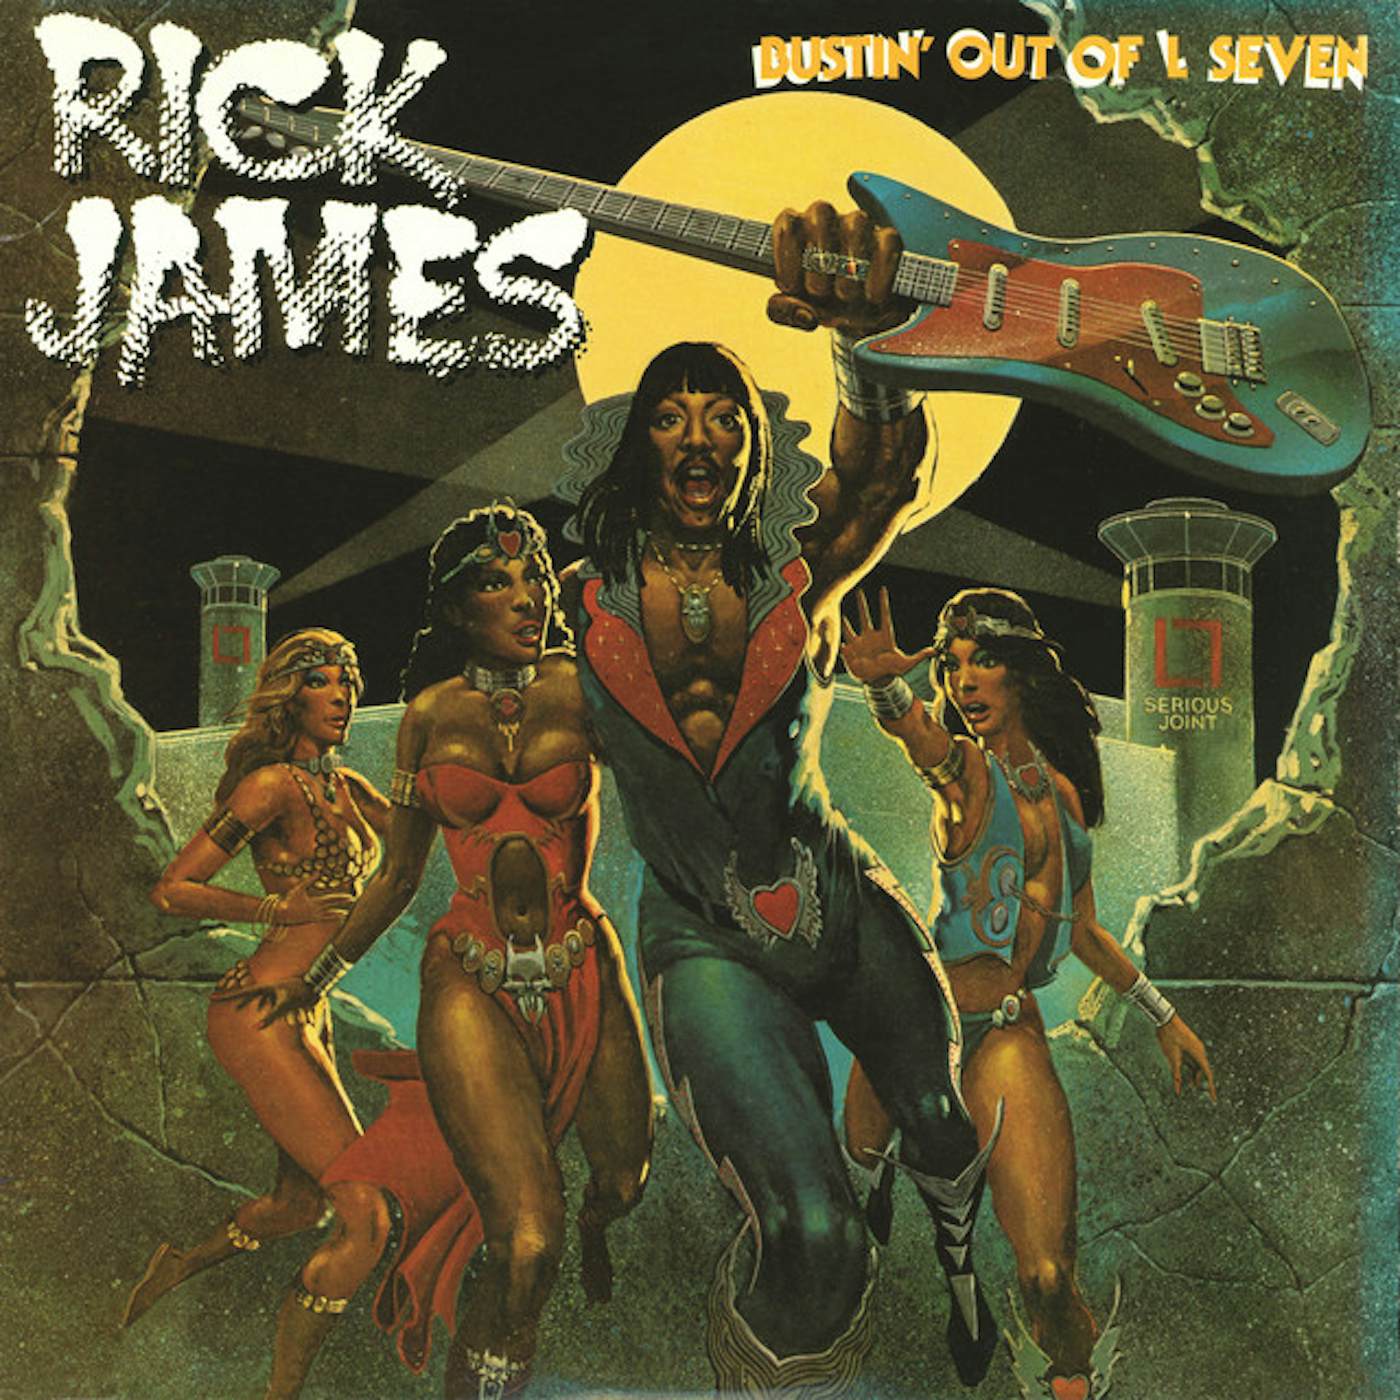 Rick James Bustin' Out of L Seven Vinyl Record